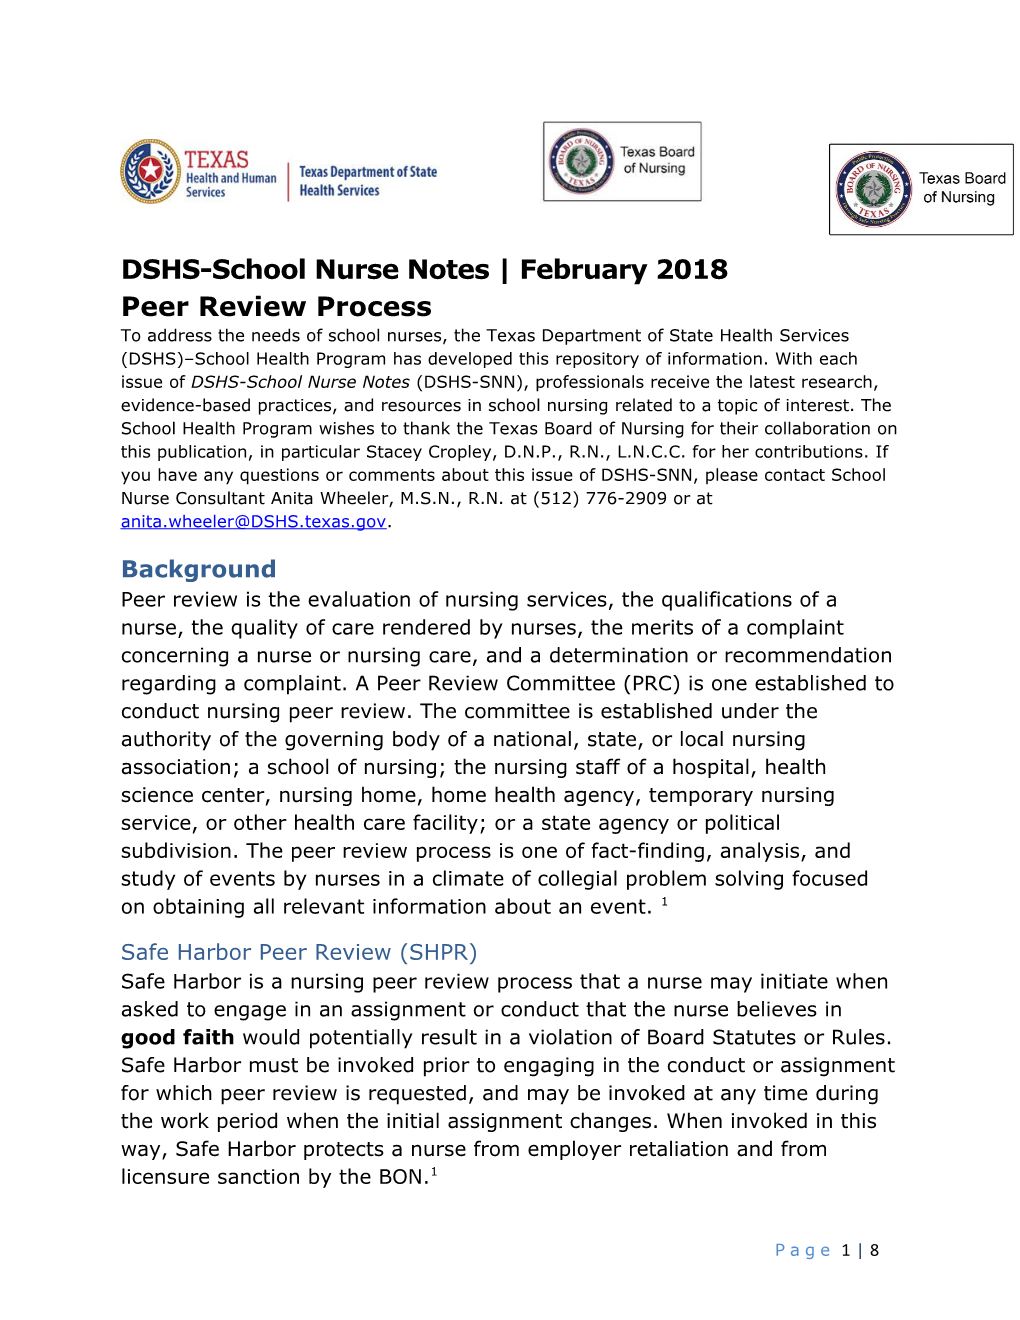 DSHS-School Nurse Notes February 2018